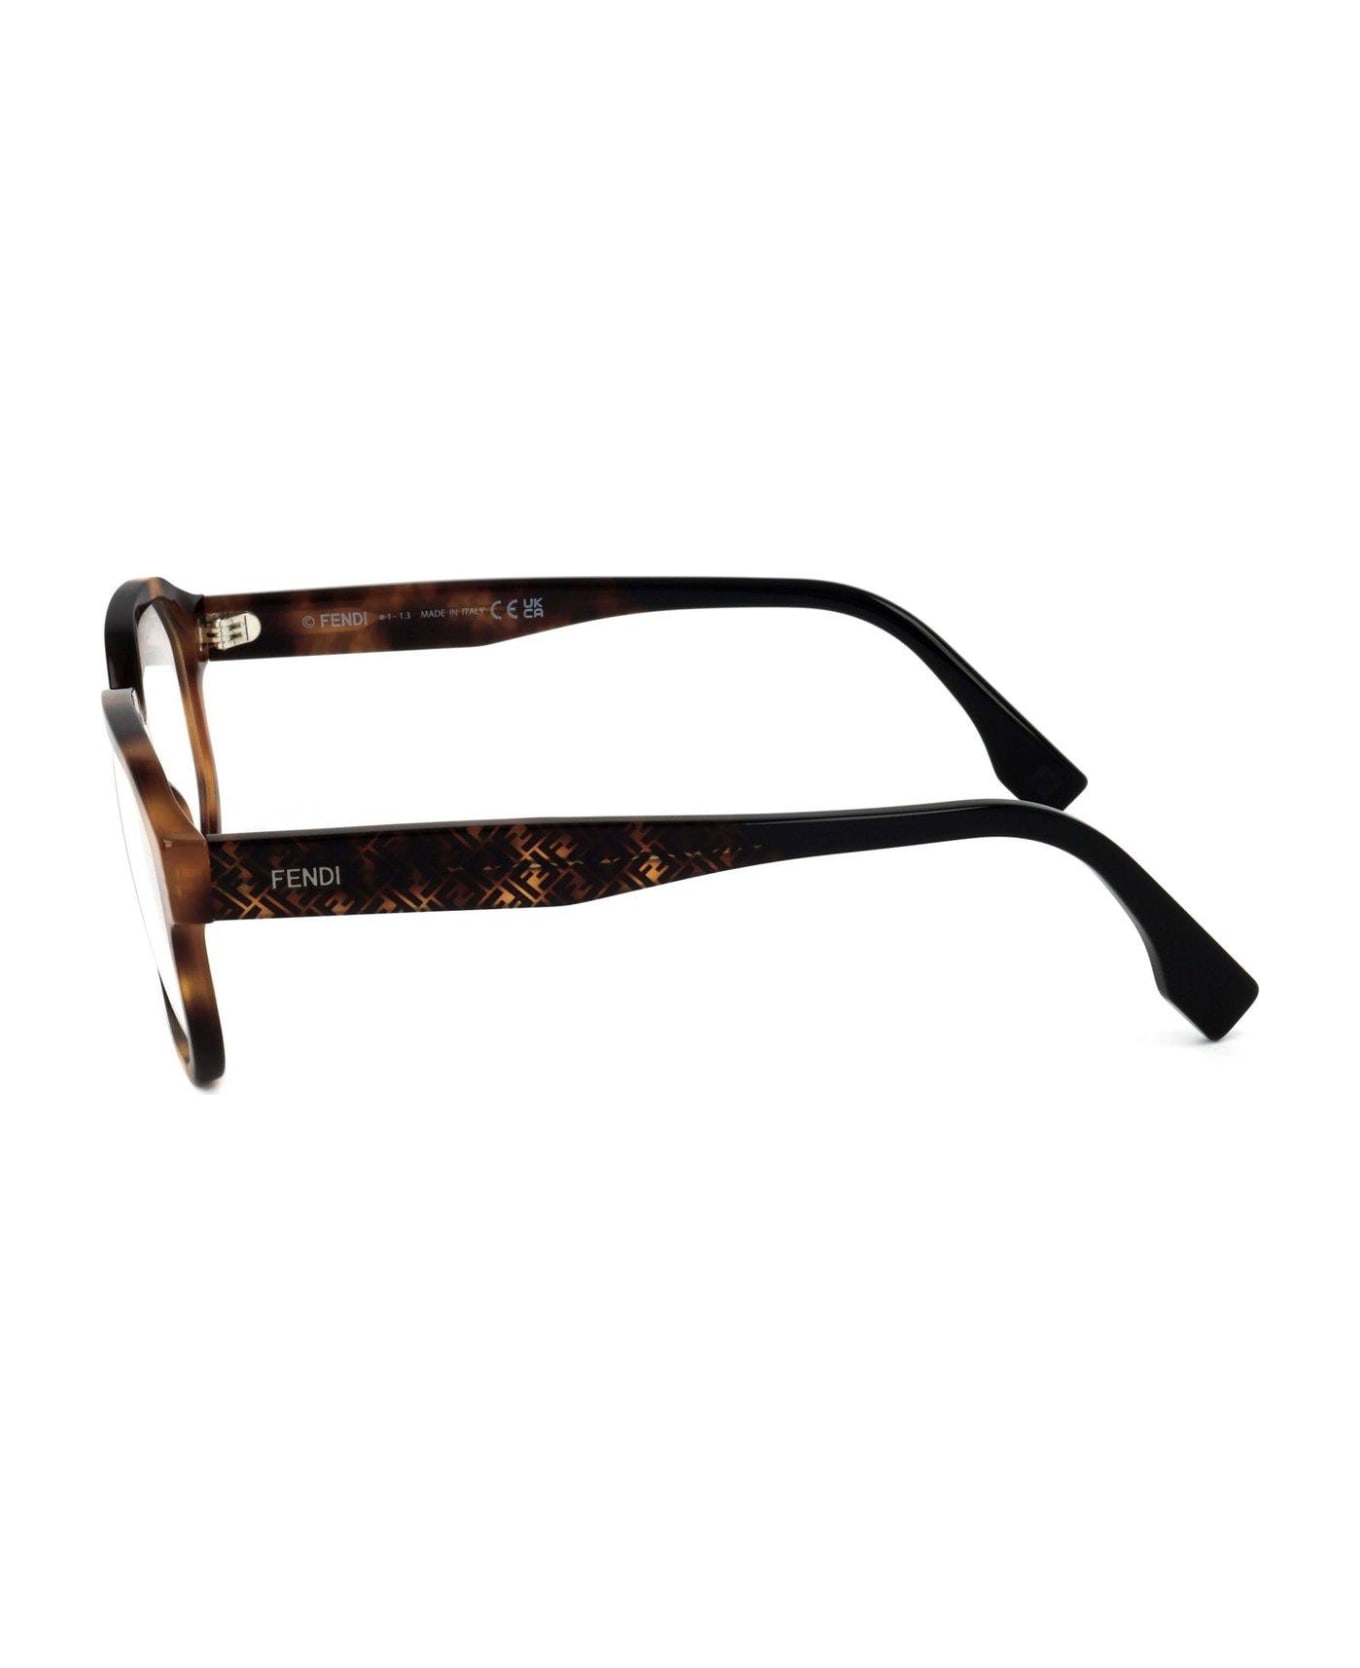 Fendi Eyewear Geometric Frame Glasses - 053